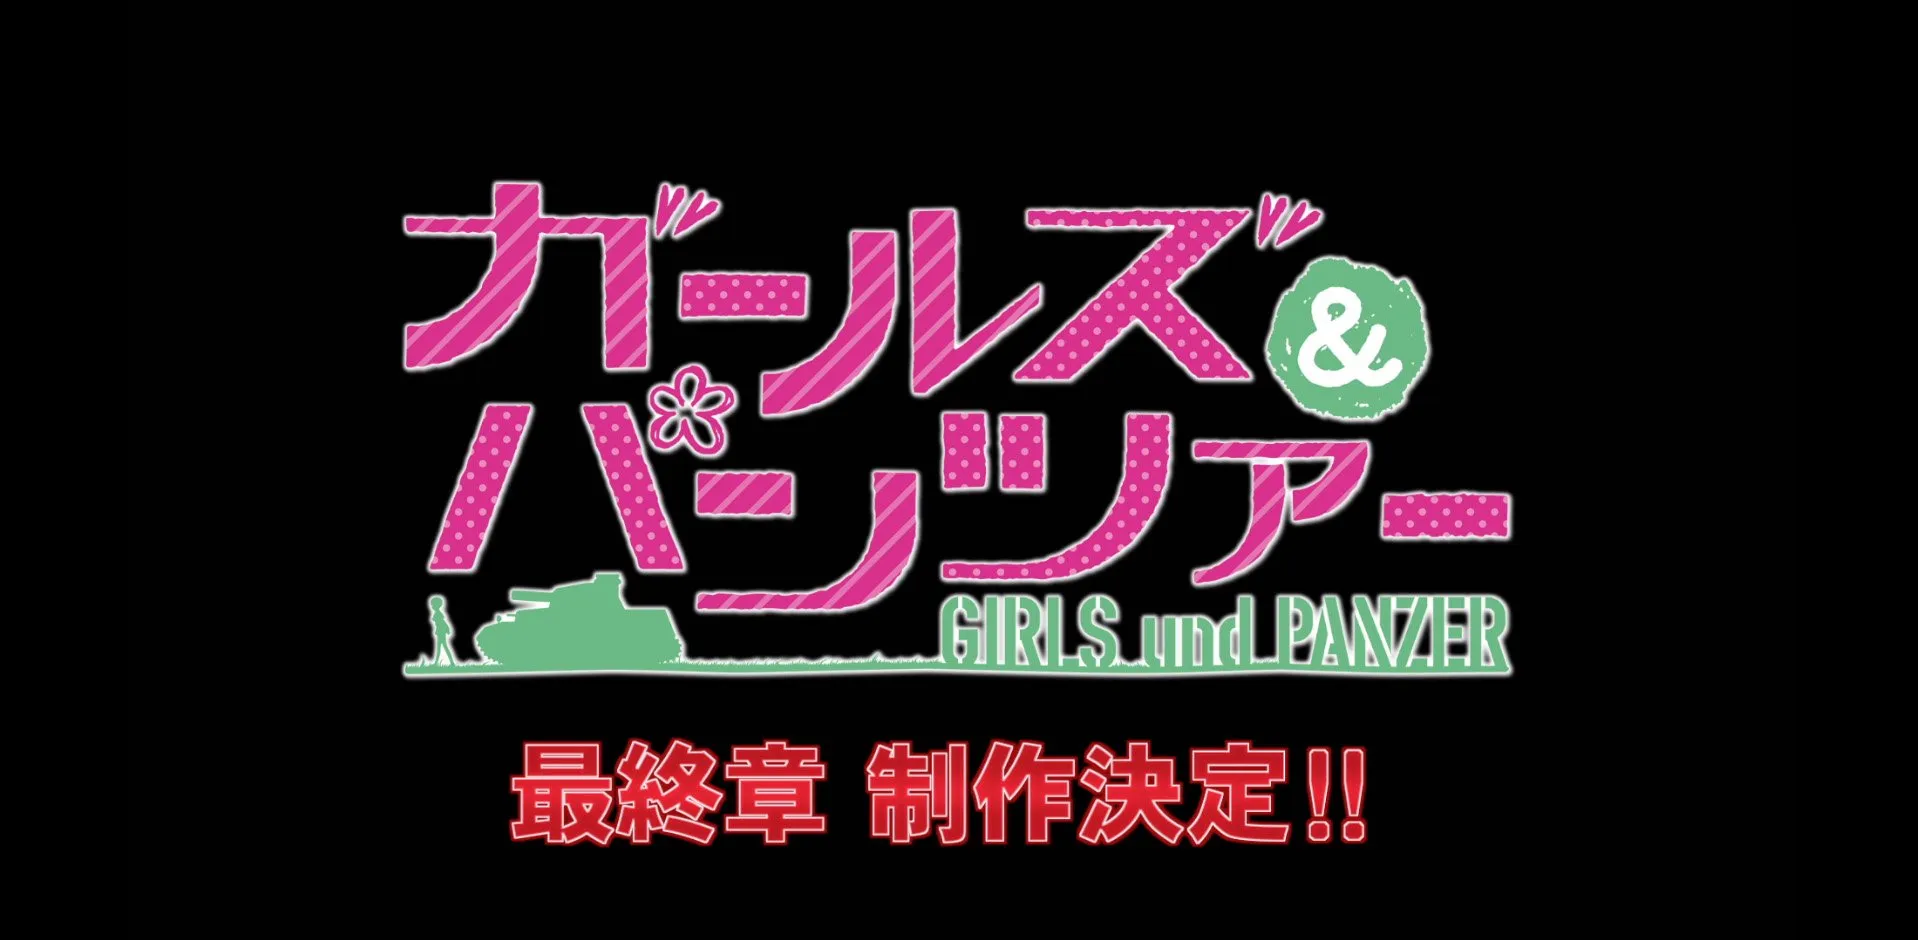 Girls und Panzer da detalles sobre su segunda temporada